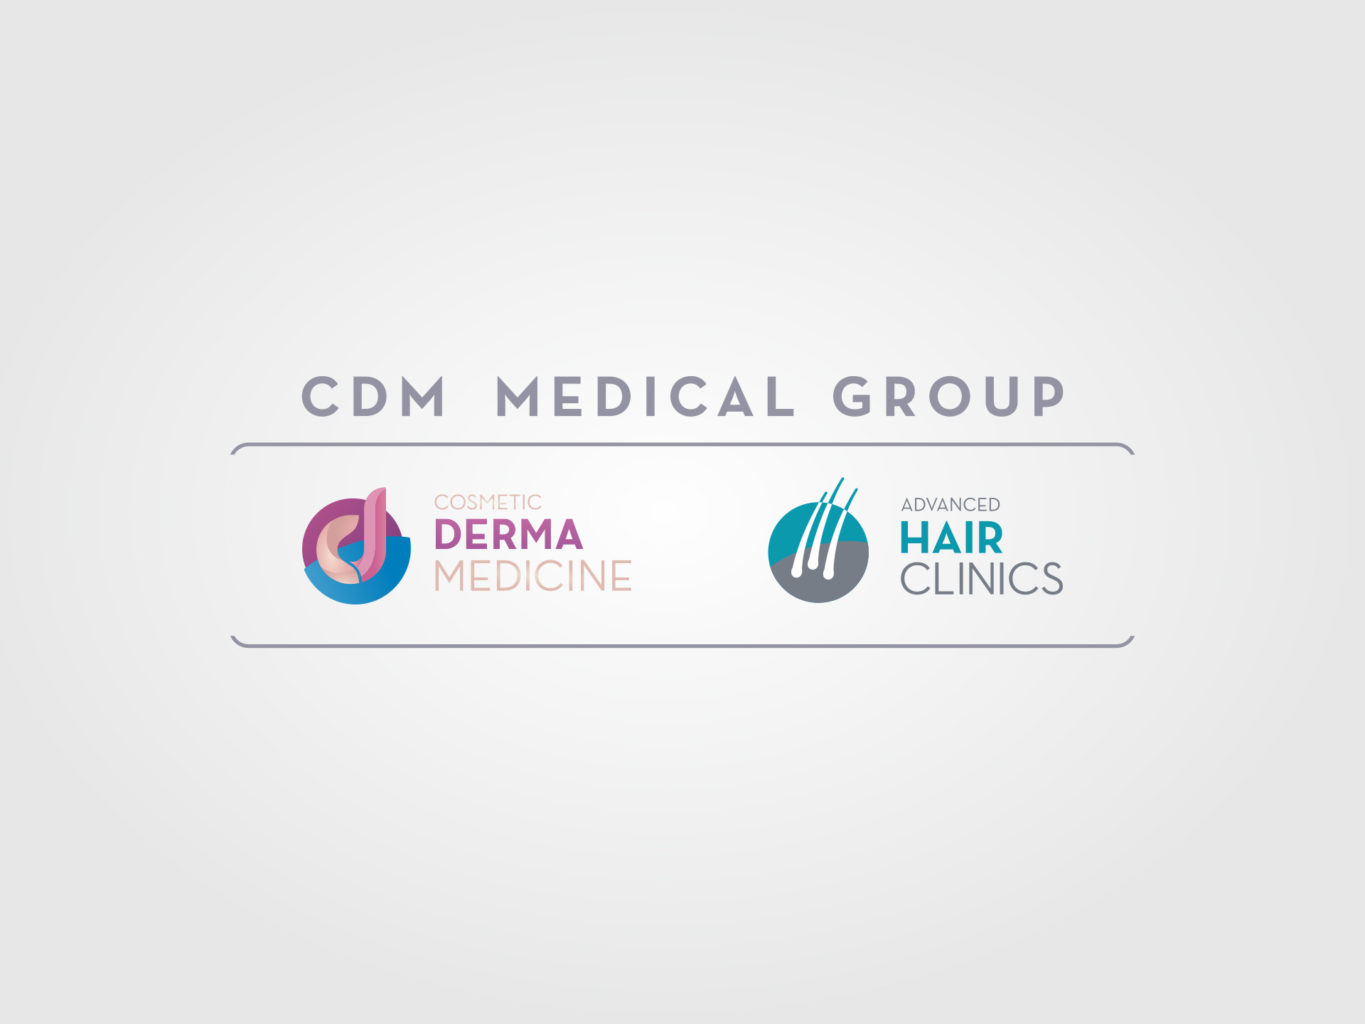 advanced derma medicine and advanced hair clinics logos for cdm medical group by fiftyeggz